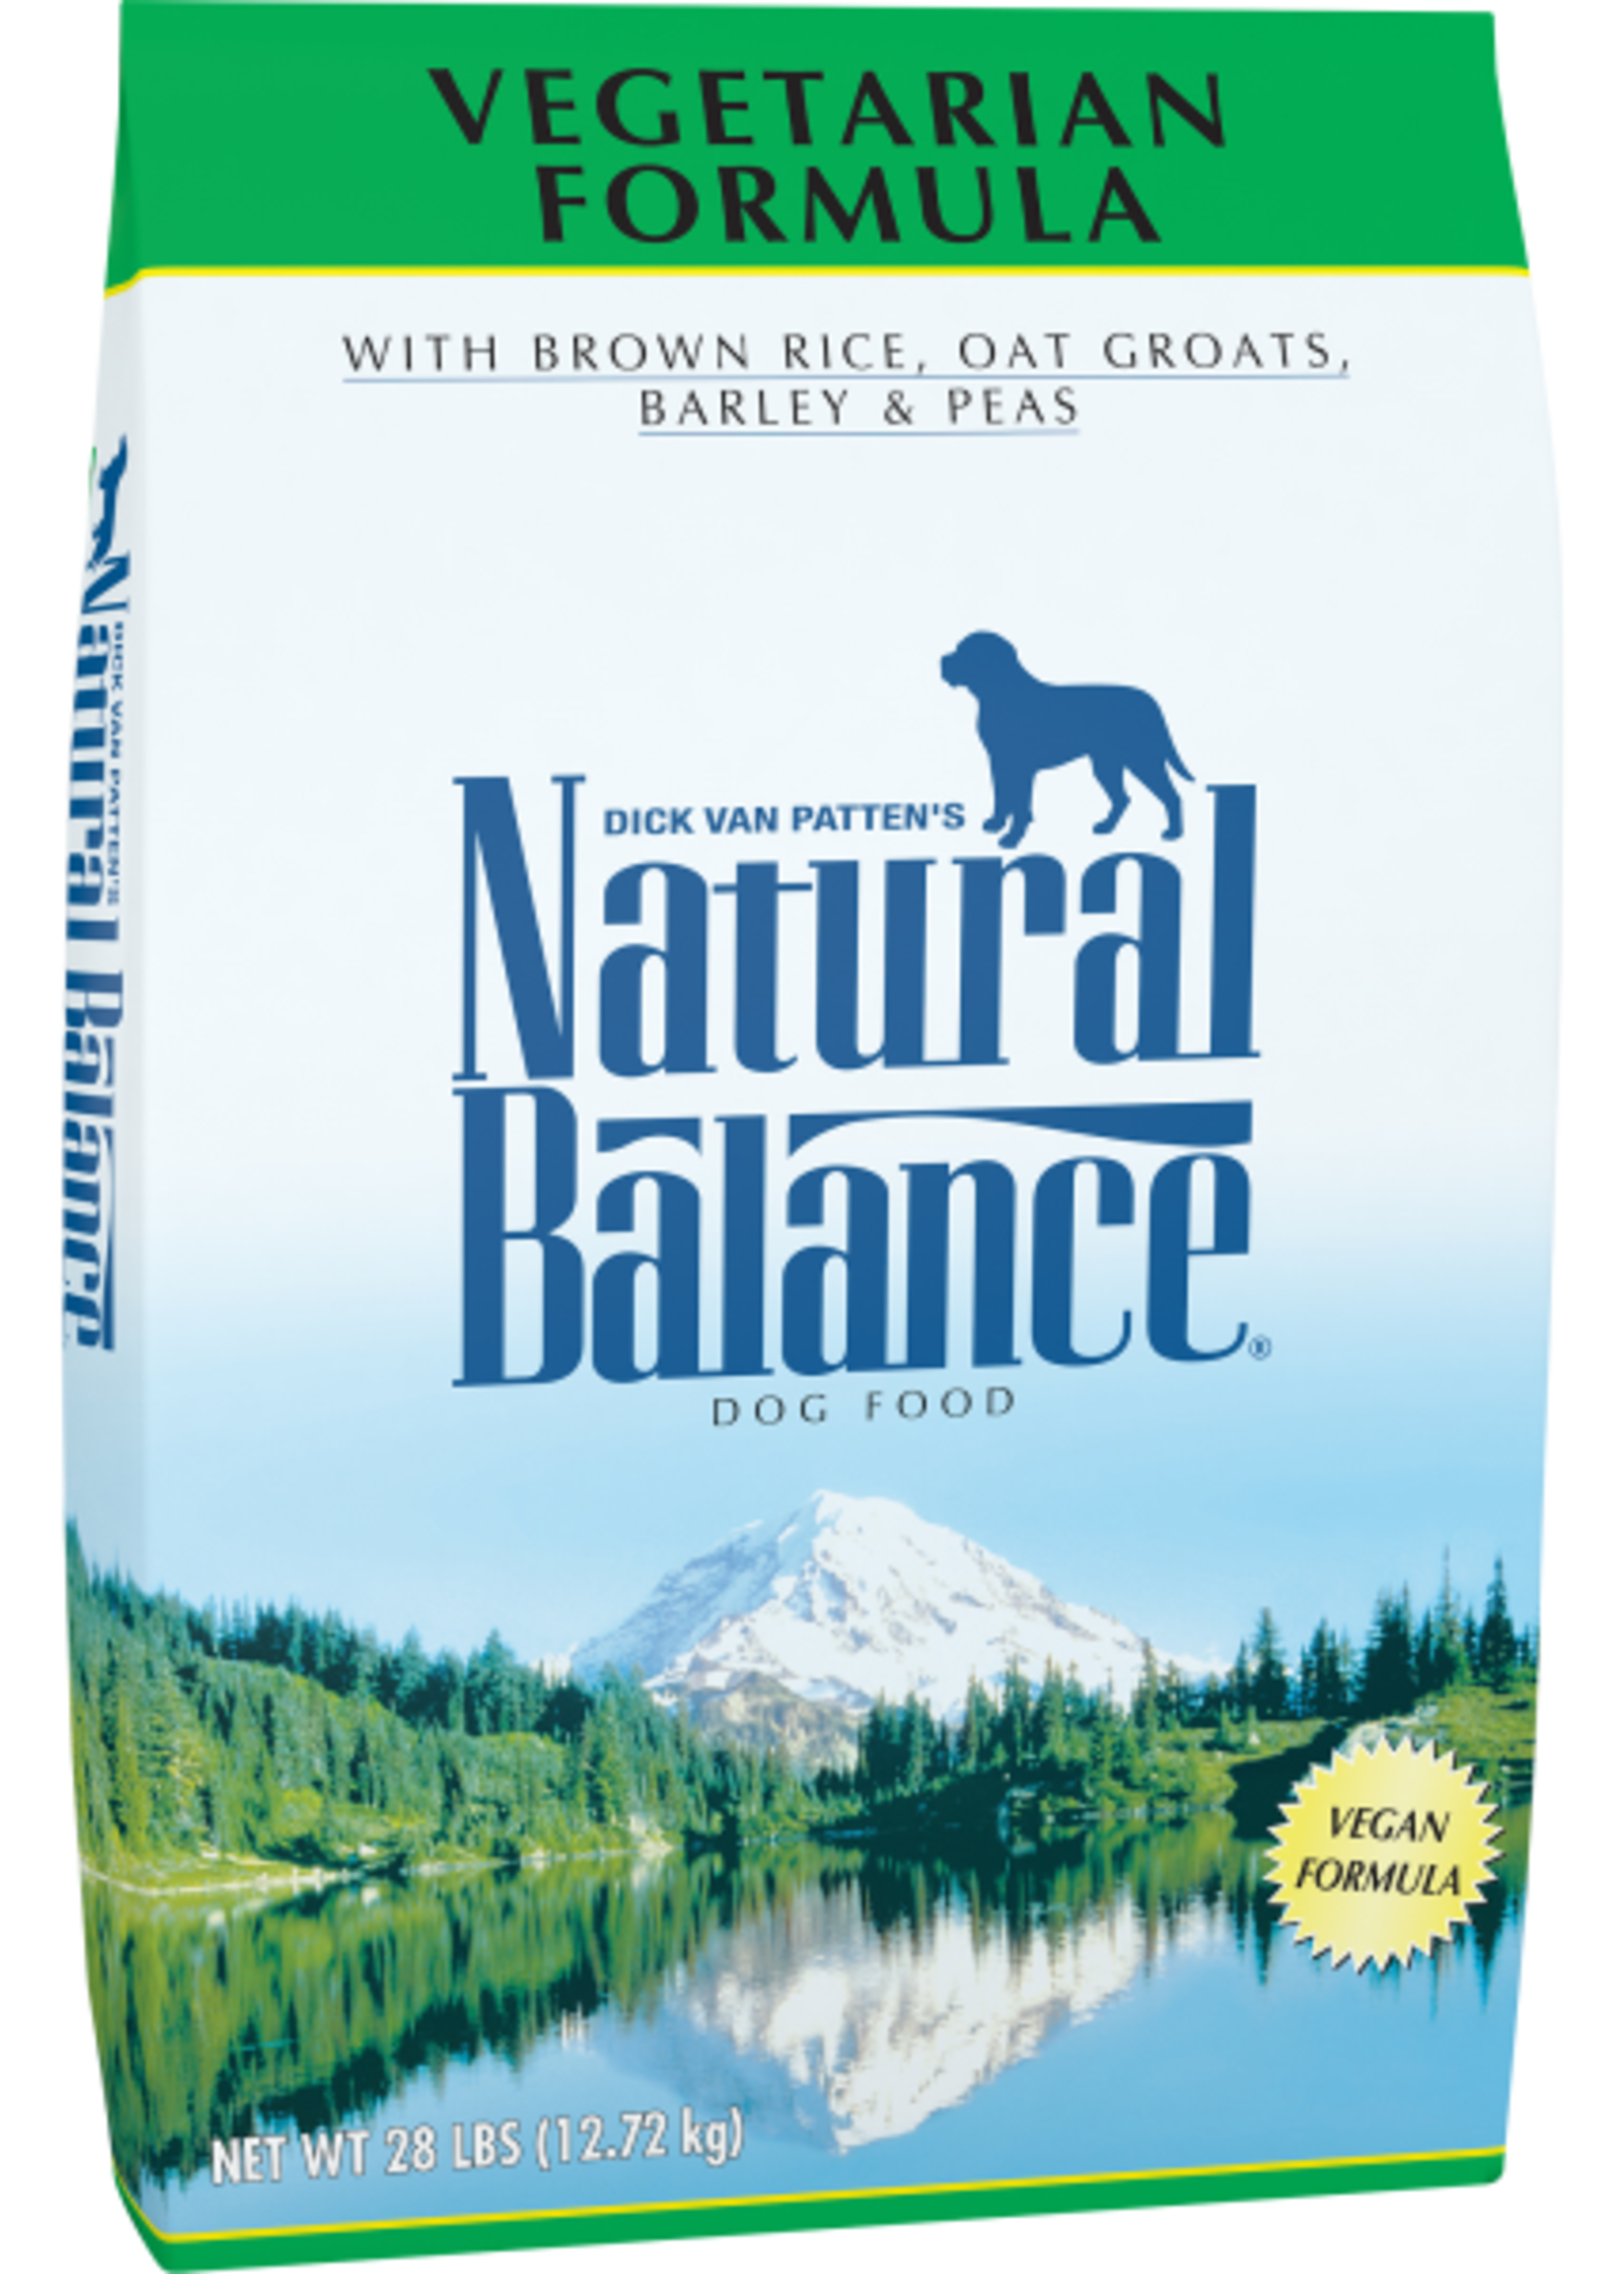 Natural Balance Natural Balance - Vegetarian